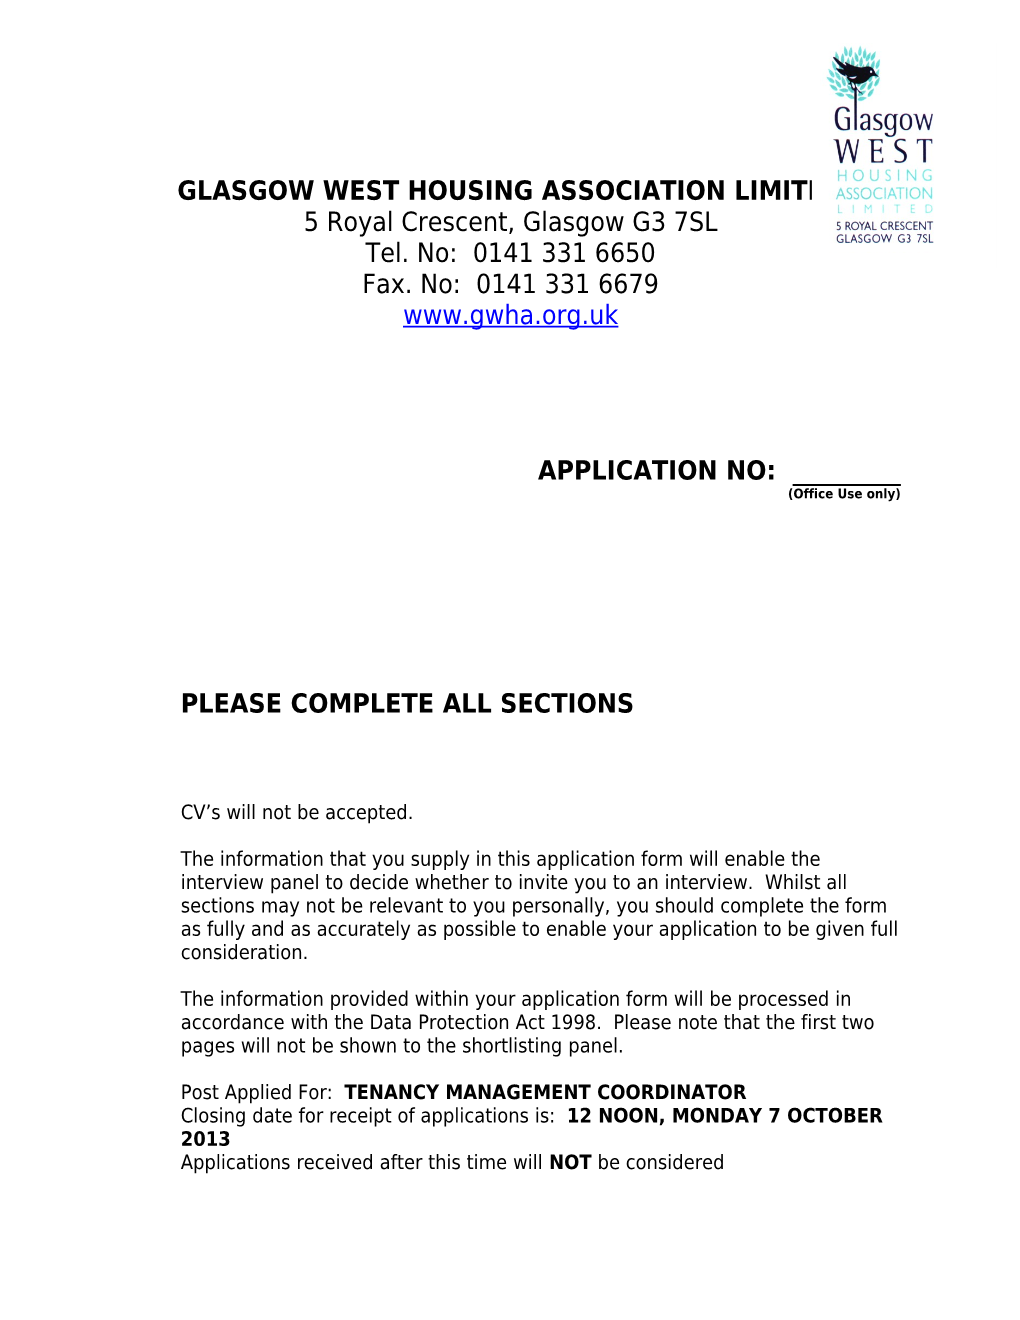 Glasgow West Housing Association Limited